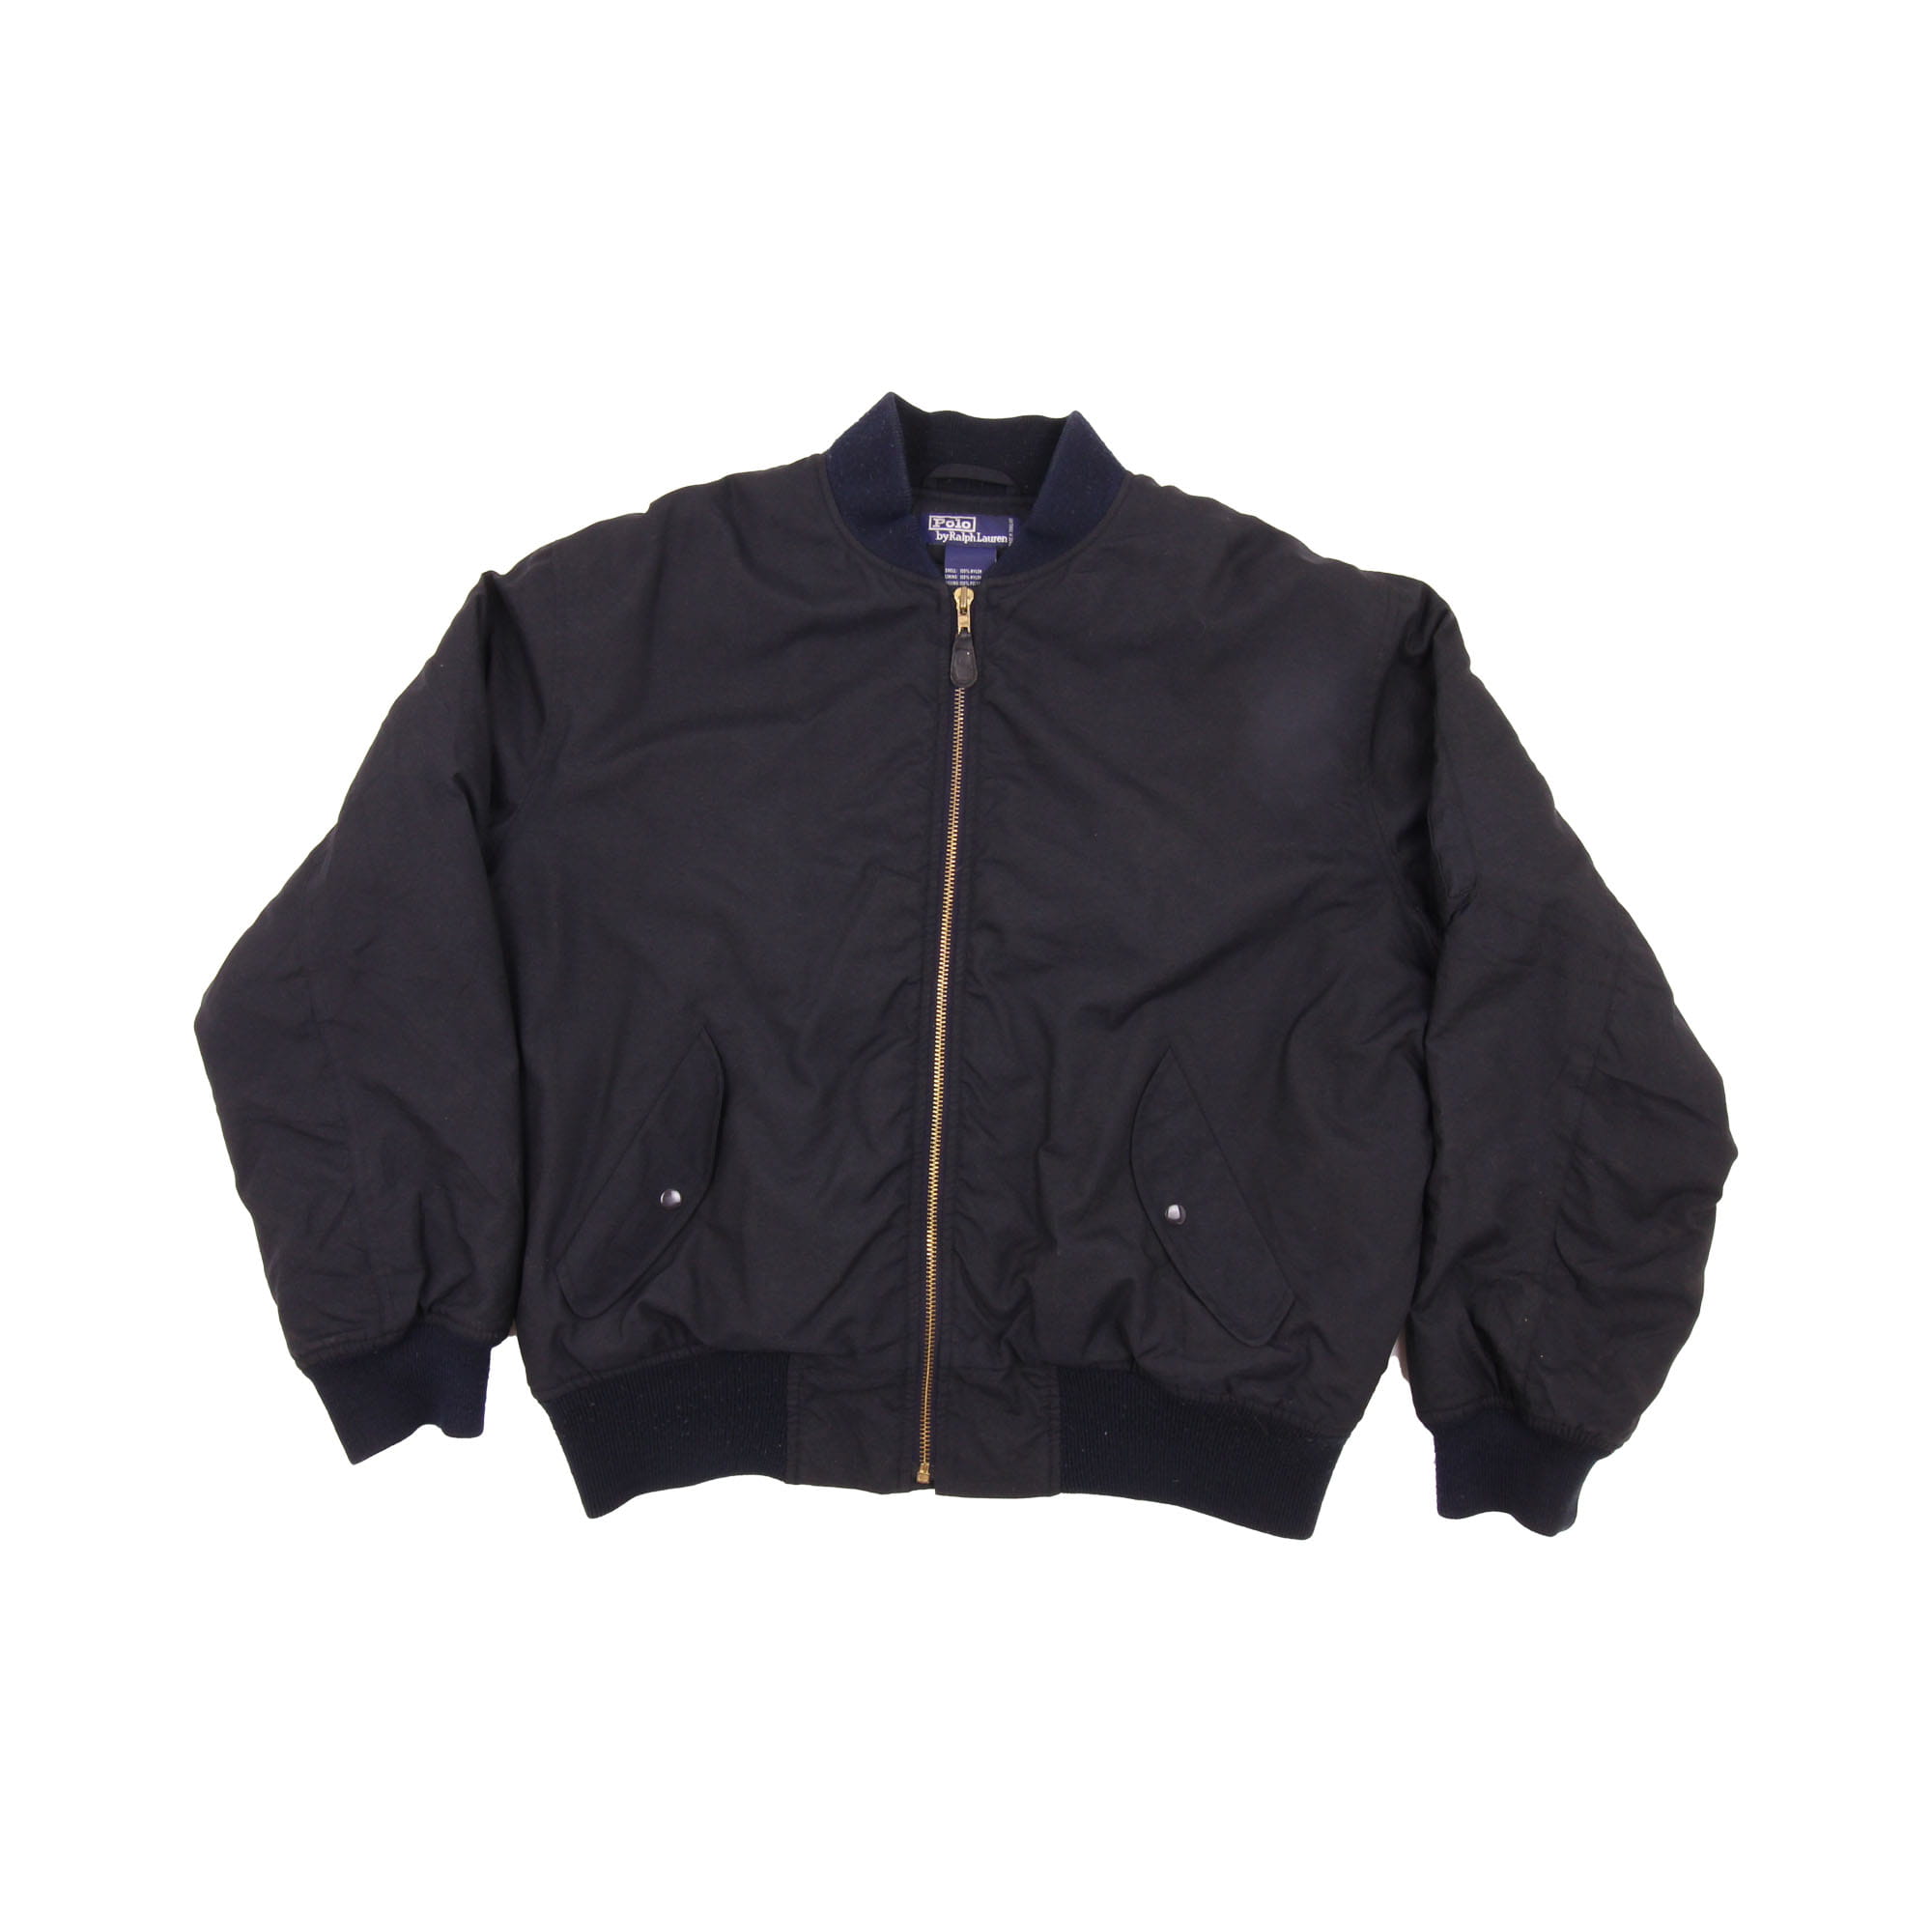 Polo Ralph Lauren Bomber Warm Jacket Black -  M/L